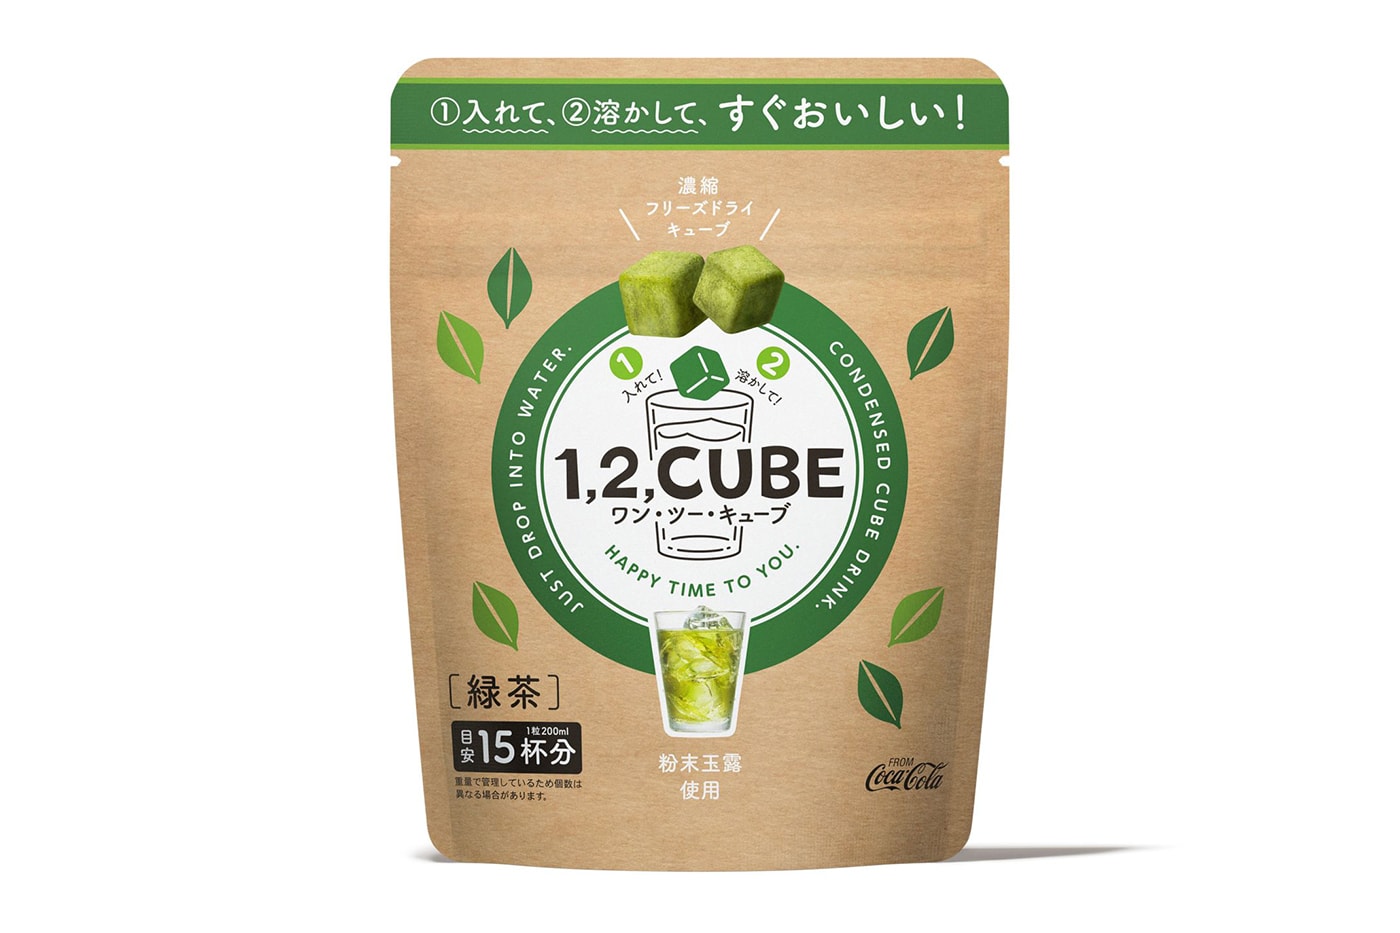 Coca-Cola Japan freeze-dried green tea and coffee cubes release info match tea eco sustainability barley tea drinks iced coffee